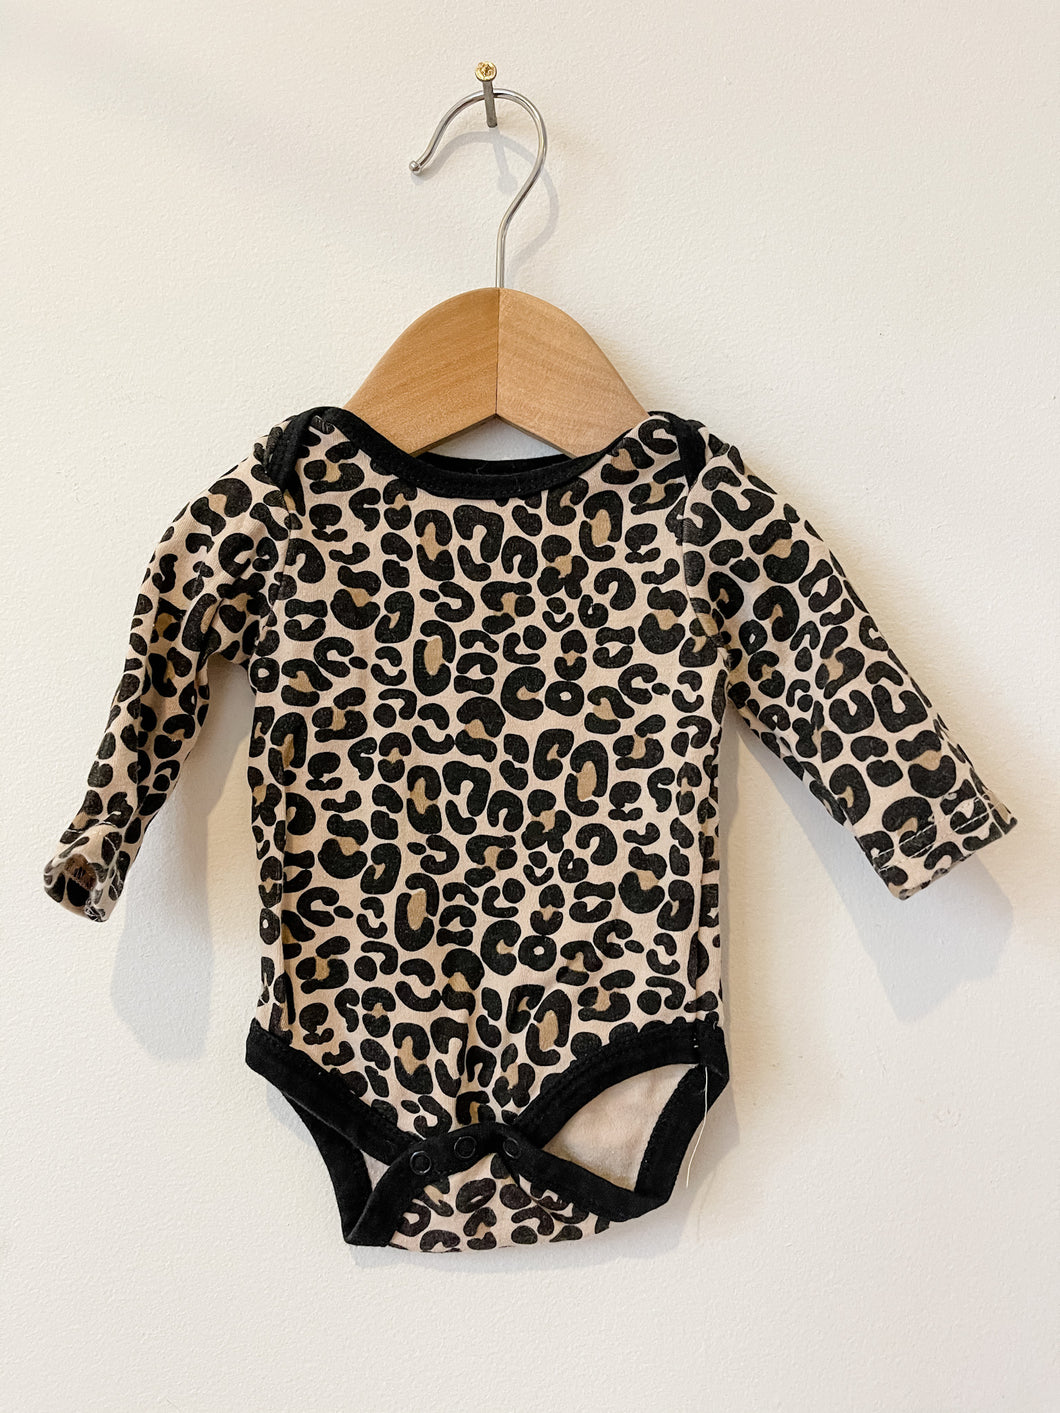 Leopard Baby Gear Bodysuit Size 0-3 Months